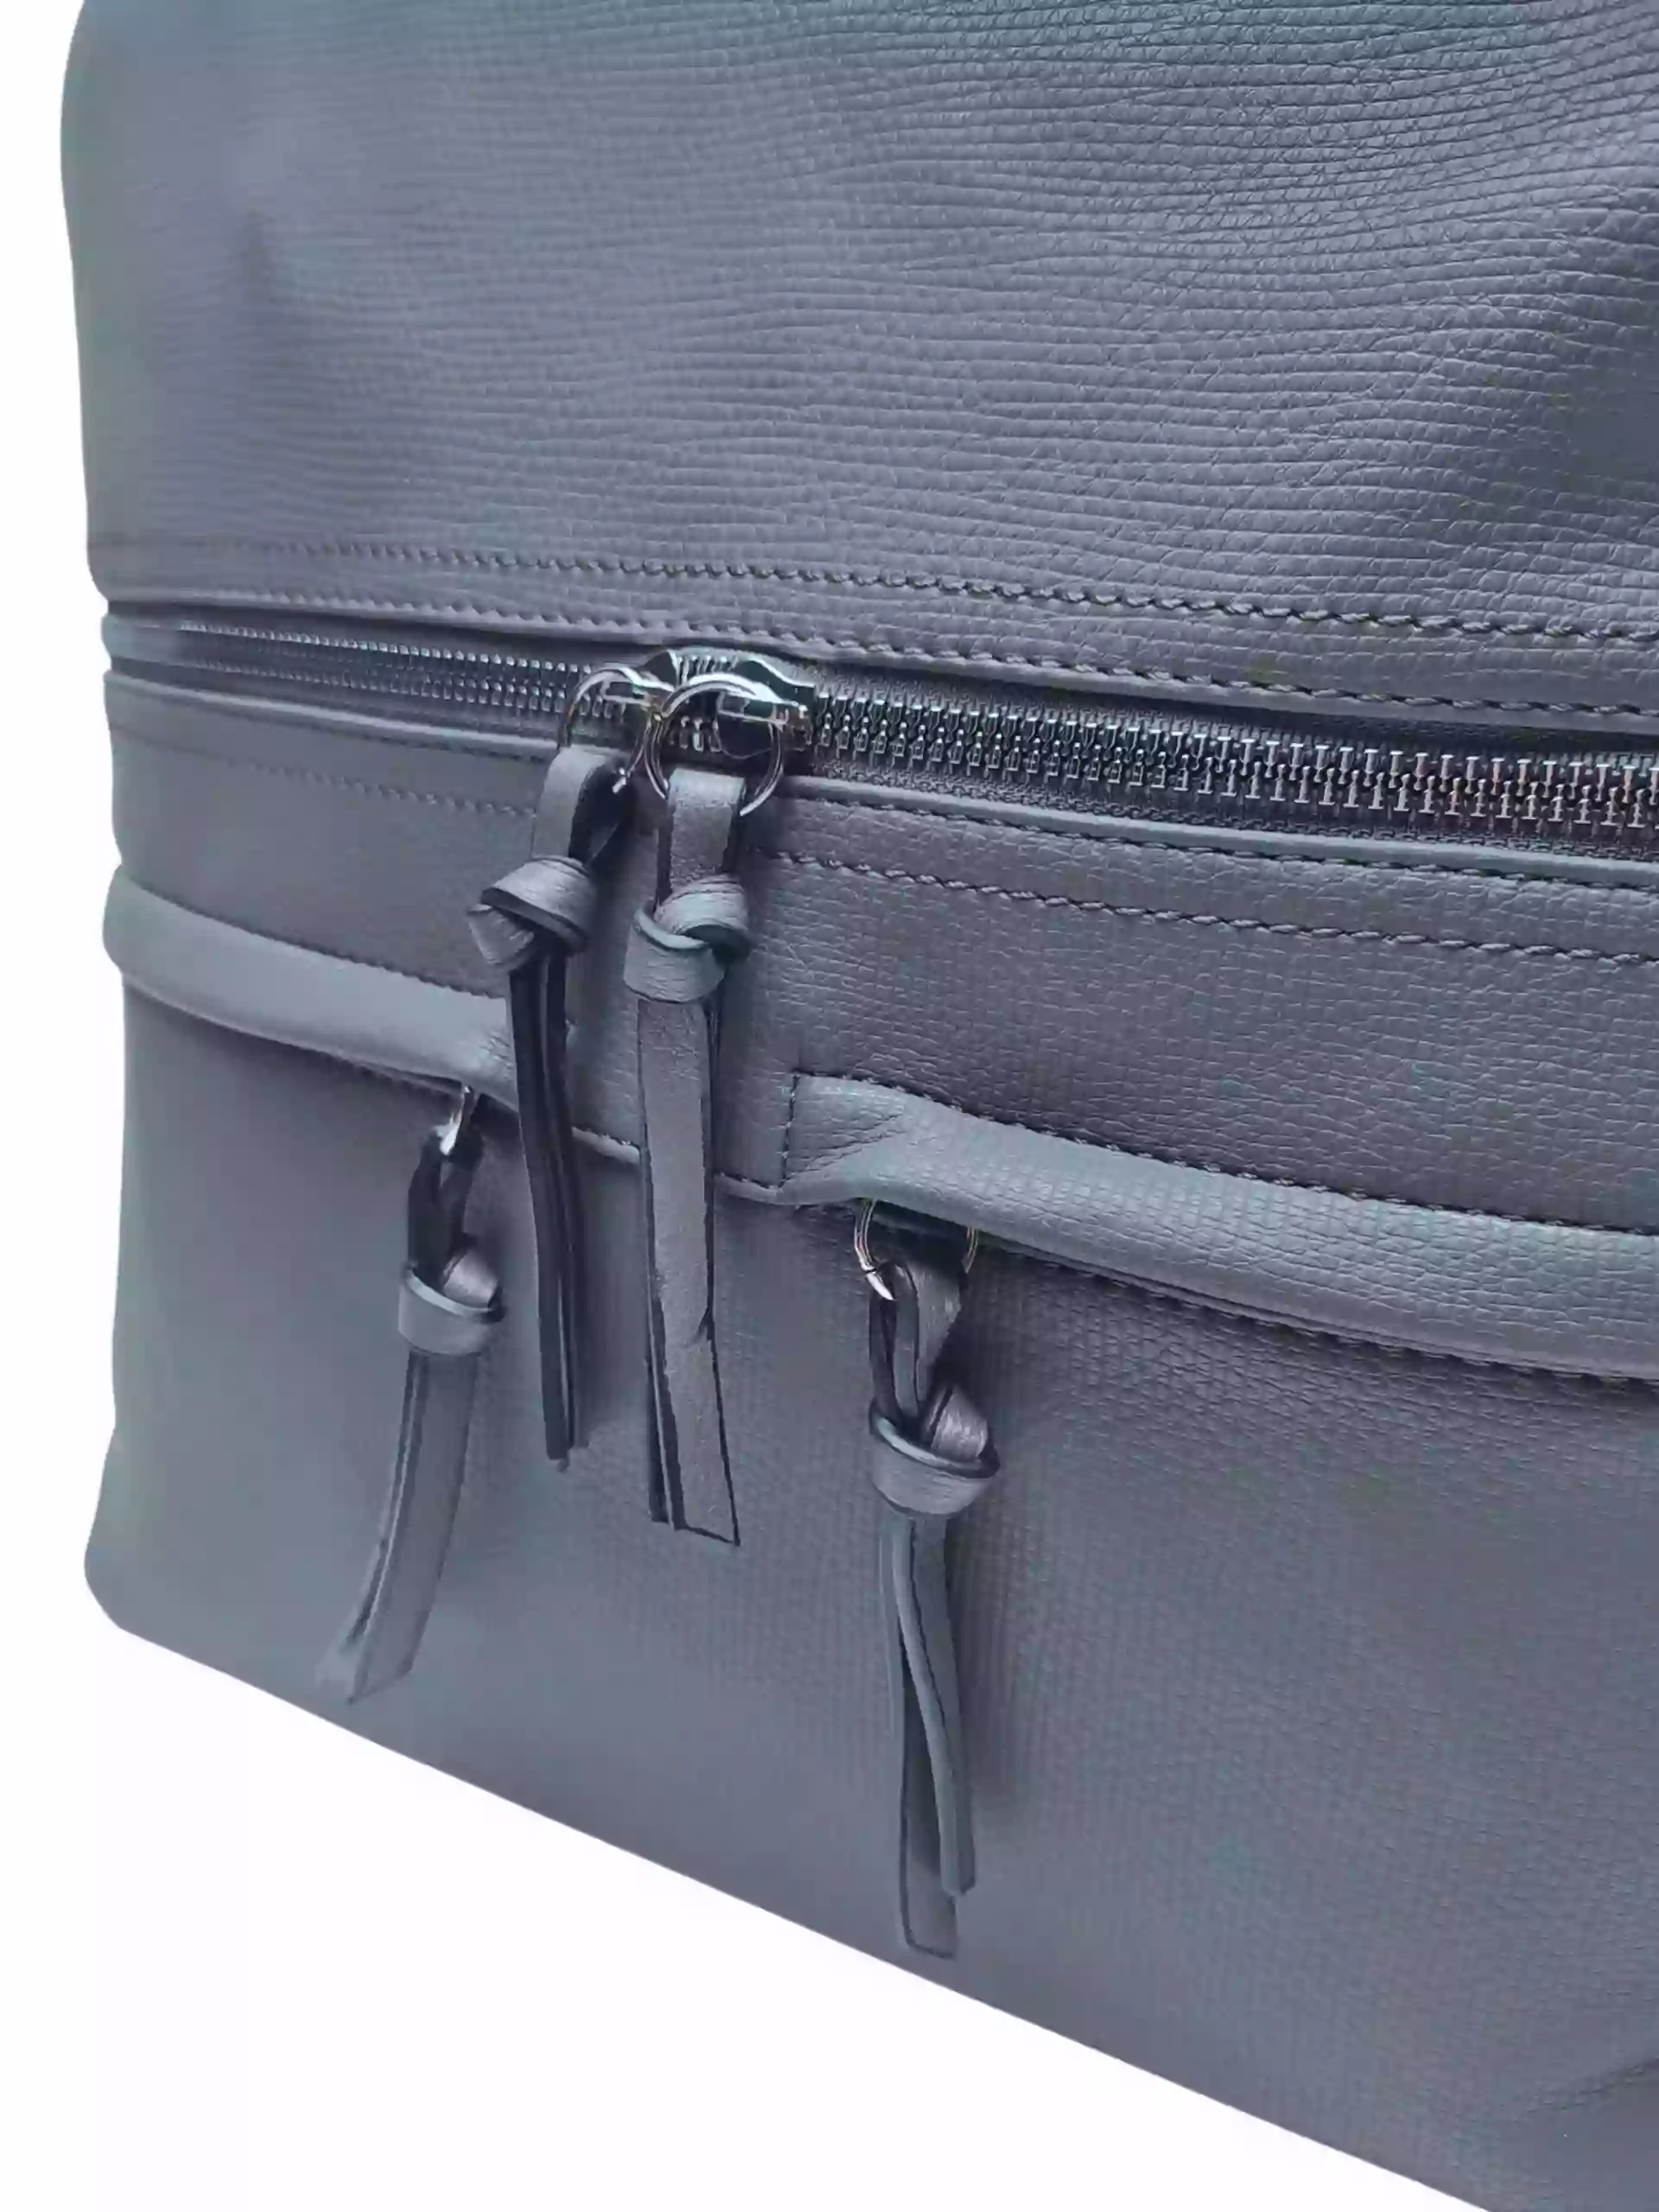 Velký středně šedý kabelko-batoh s kapsami, Tapple, H181175N2, detail kabelko-batohu 2v1